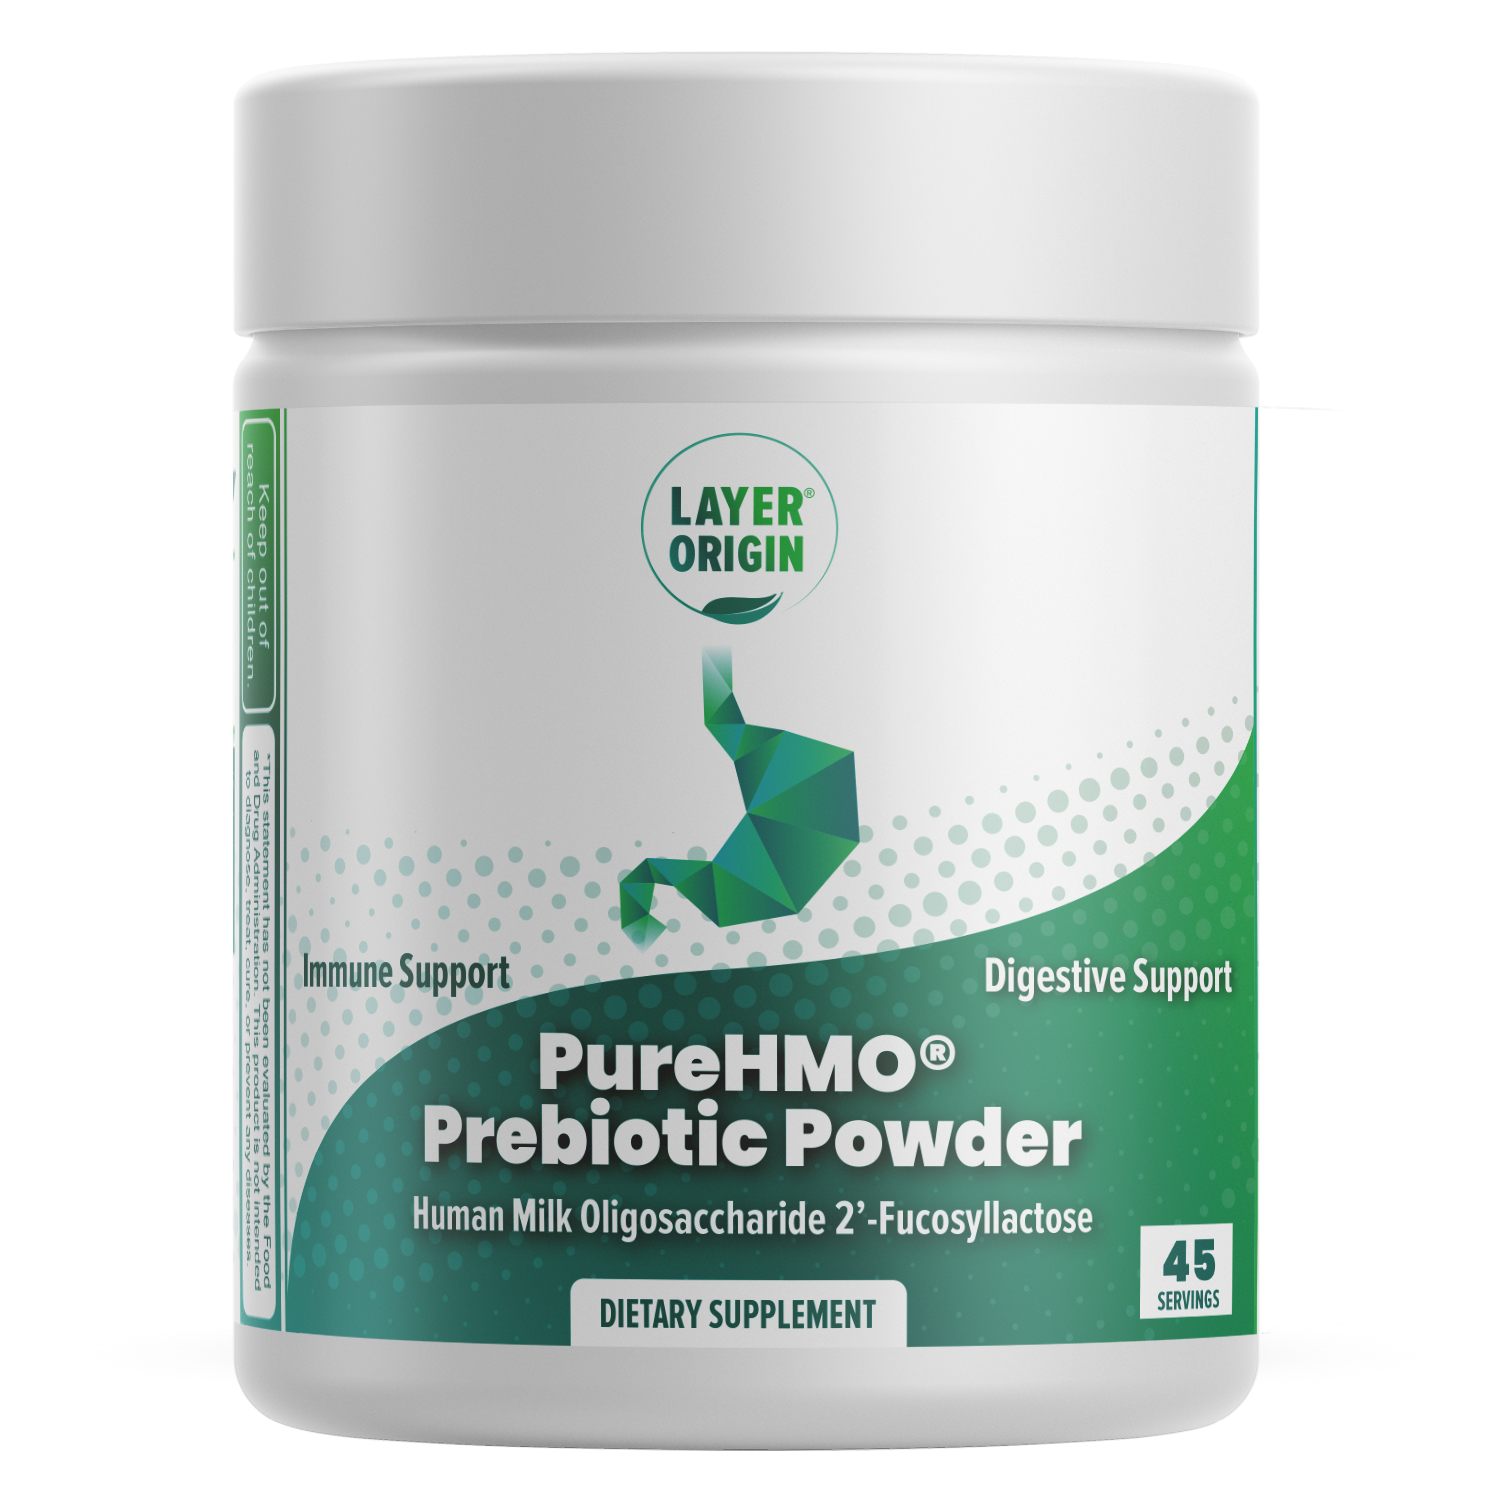 PureHMO human milk oligosaccharide supplement super prebiotic 2'-Fucosyllactose